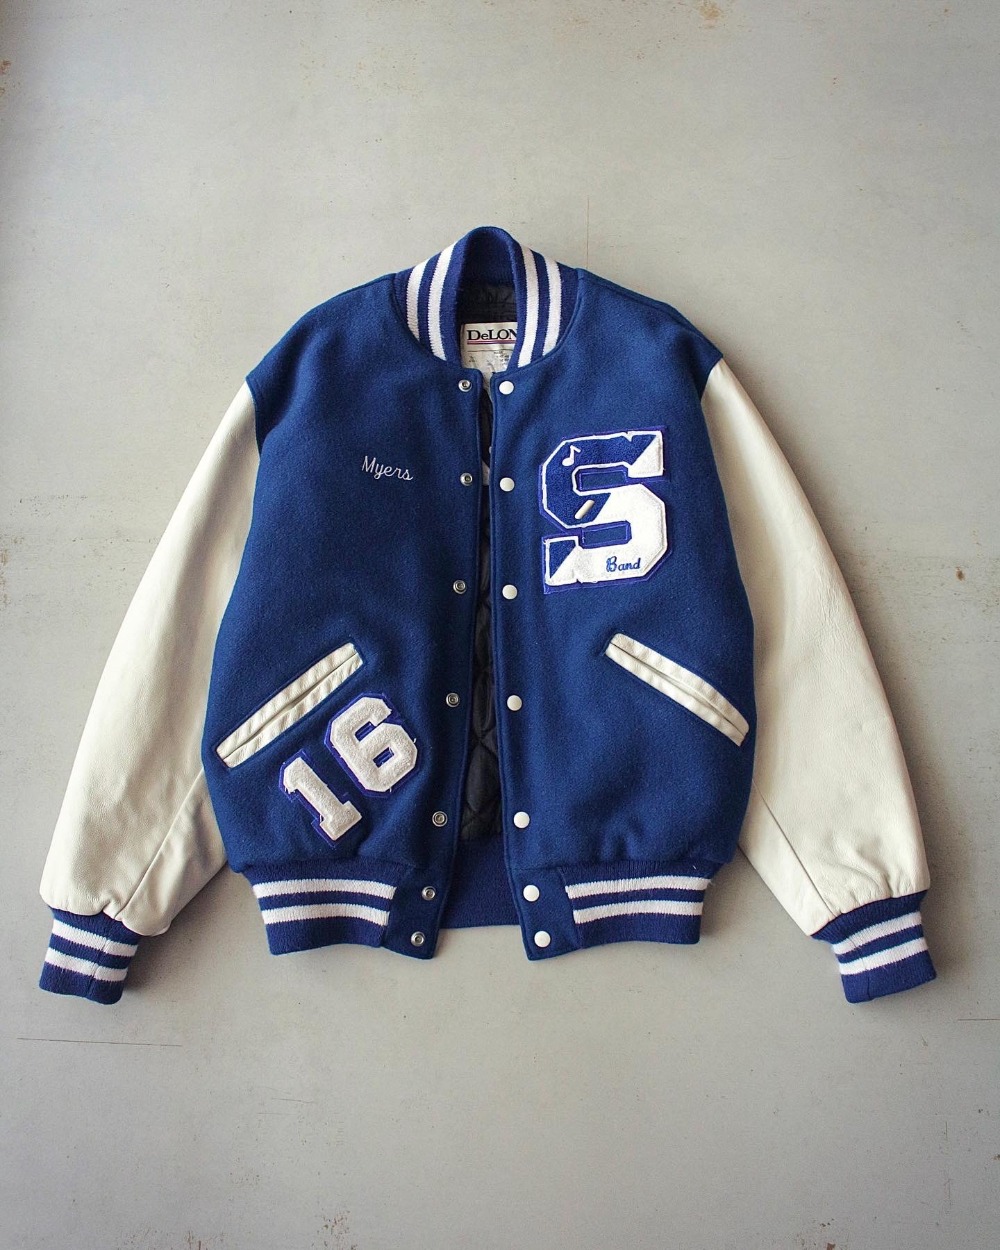 Vintage DeLong SpringField College Varsity Jacket (100-105size)